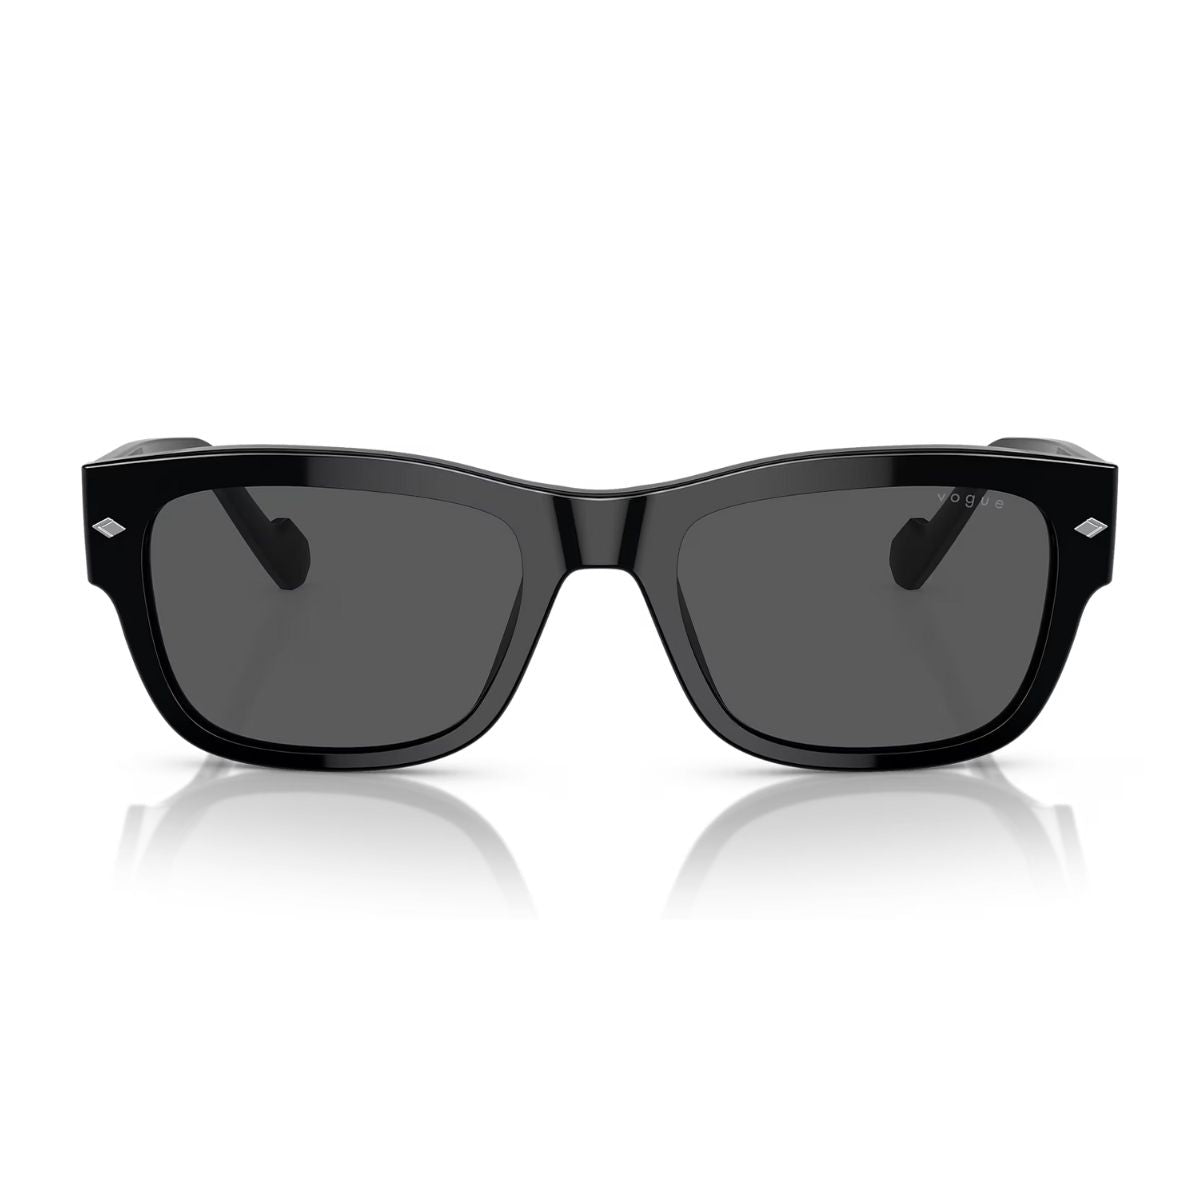 "Shop Stylish Vogue 5530 Black Rectangle Sunglasses For Women's | Optorium"